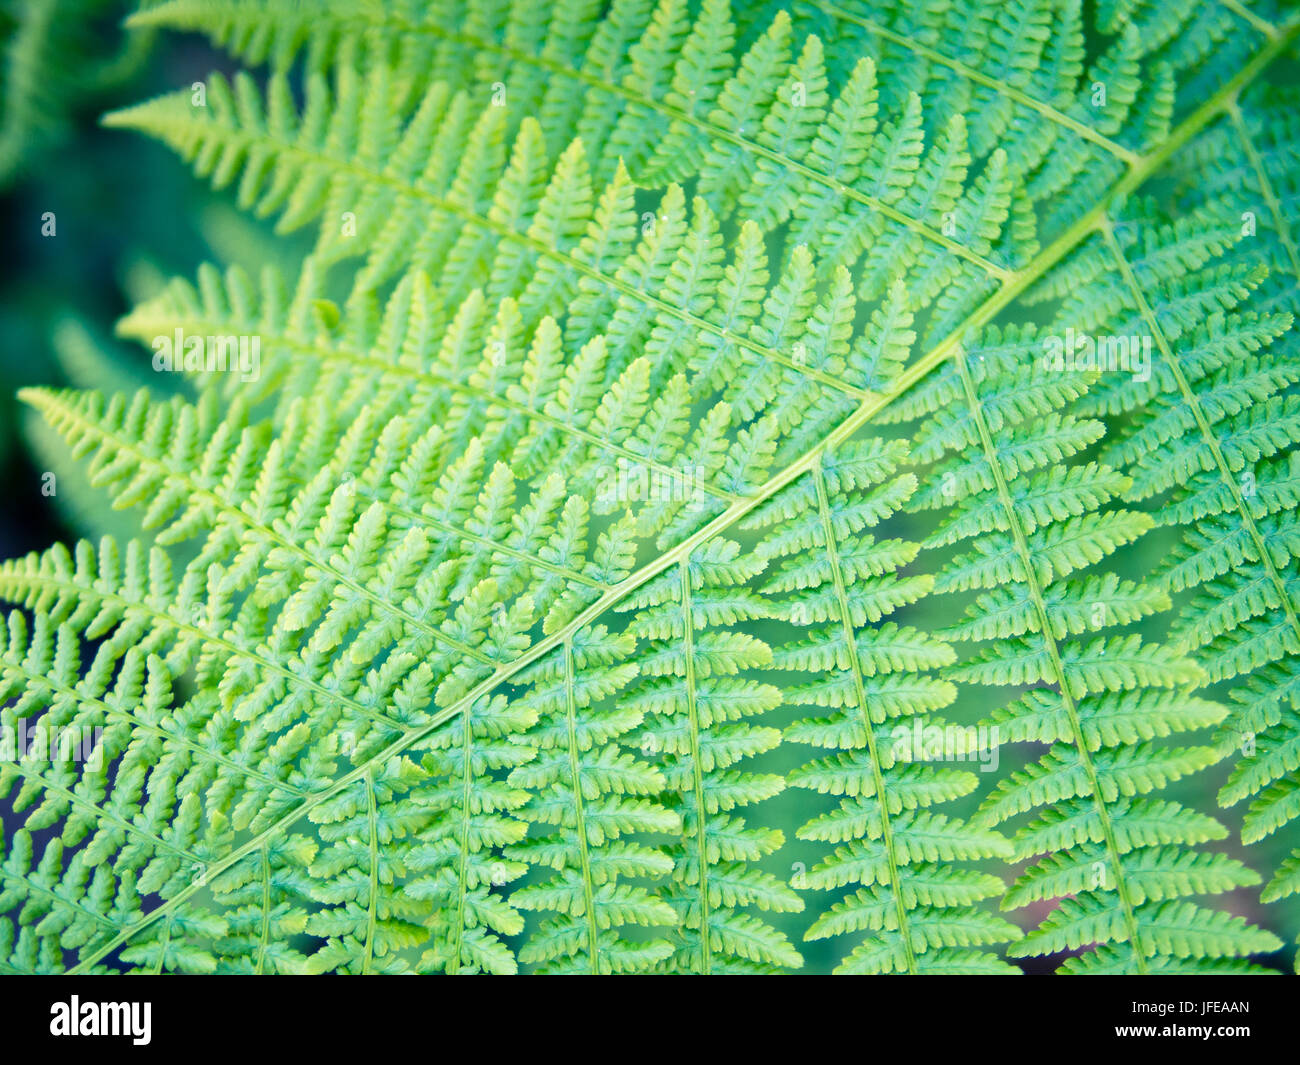 Detail of fern leaf, bracken sword, fresh saturated green symmetry pattern, nature representation Stock Photo